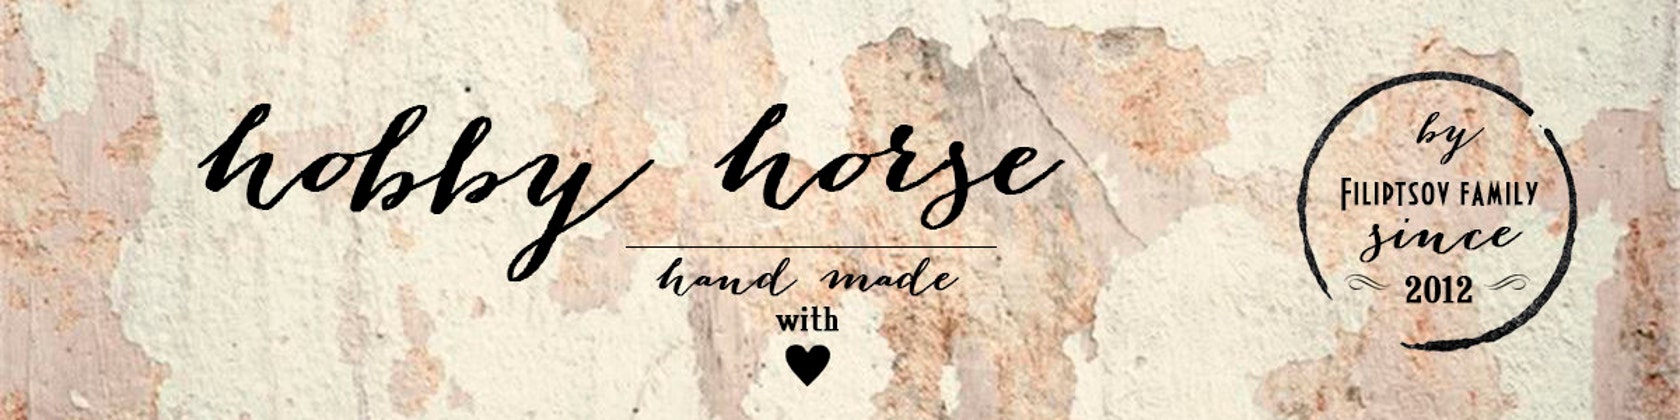 Respect The Horses Hobbyhorsing design hobbyhorse equetrian Zip Pouch by Bi  Nutz - Pixels